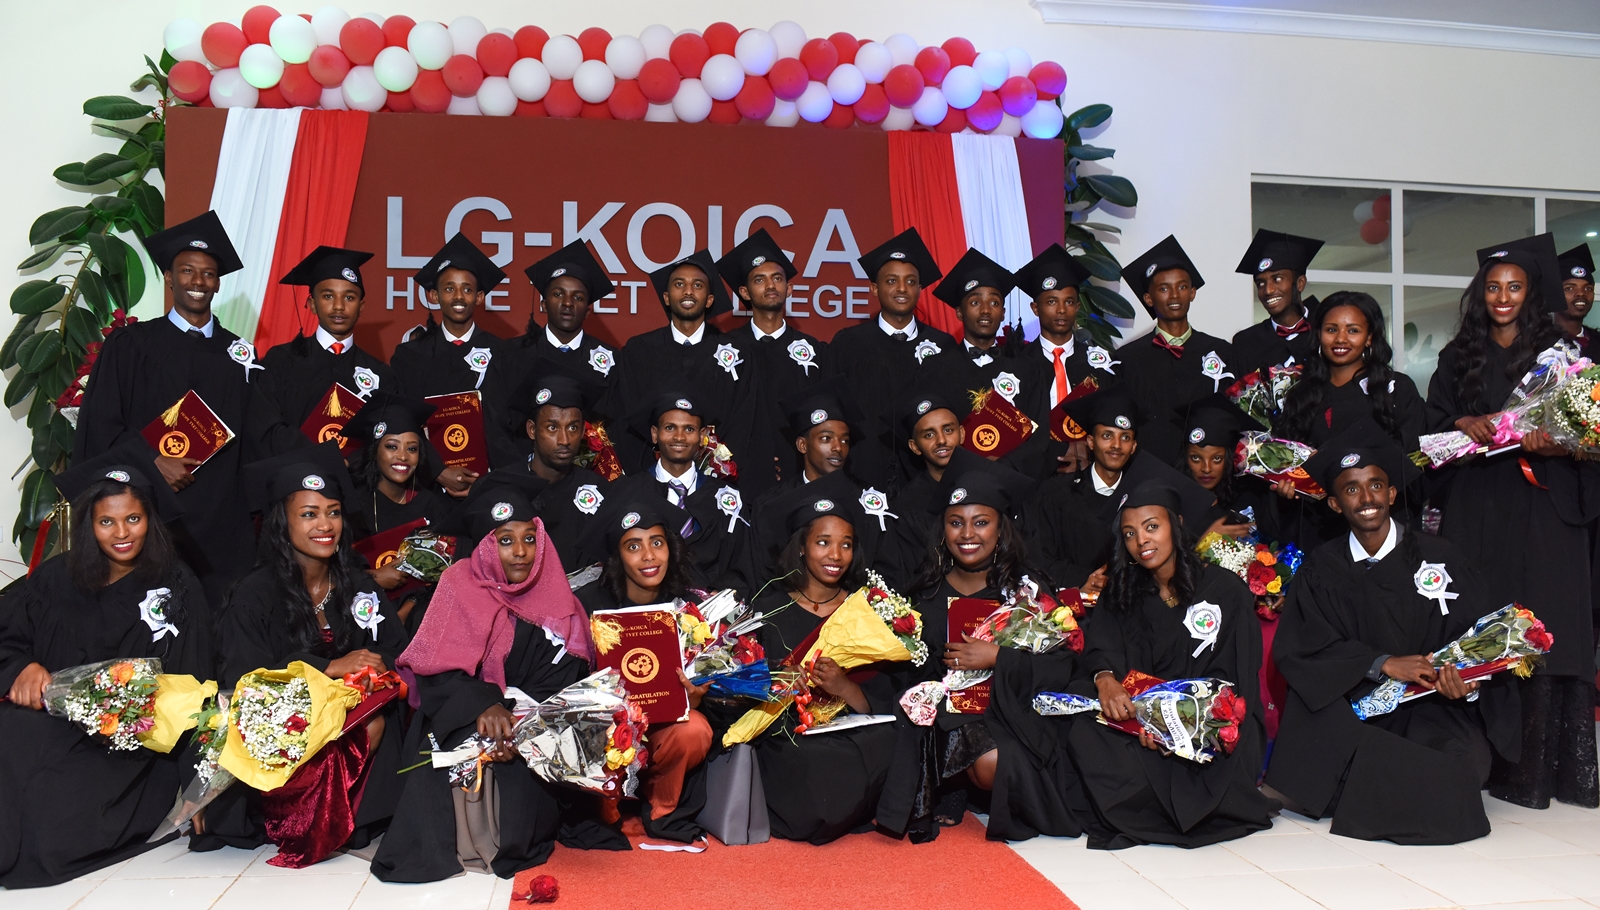 LG전자가 1일 에티오피아 수도 아디스아바바에 있는 「LG-KOICA 희망직업훈련학교」에서 ‘제3회 LG-KOICA 희망직업훈련학교 졸업식’을 개최했다. 